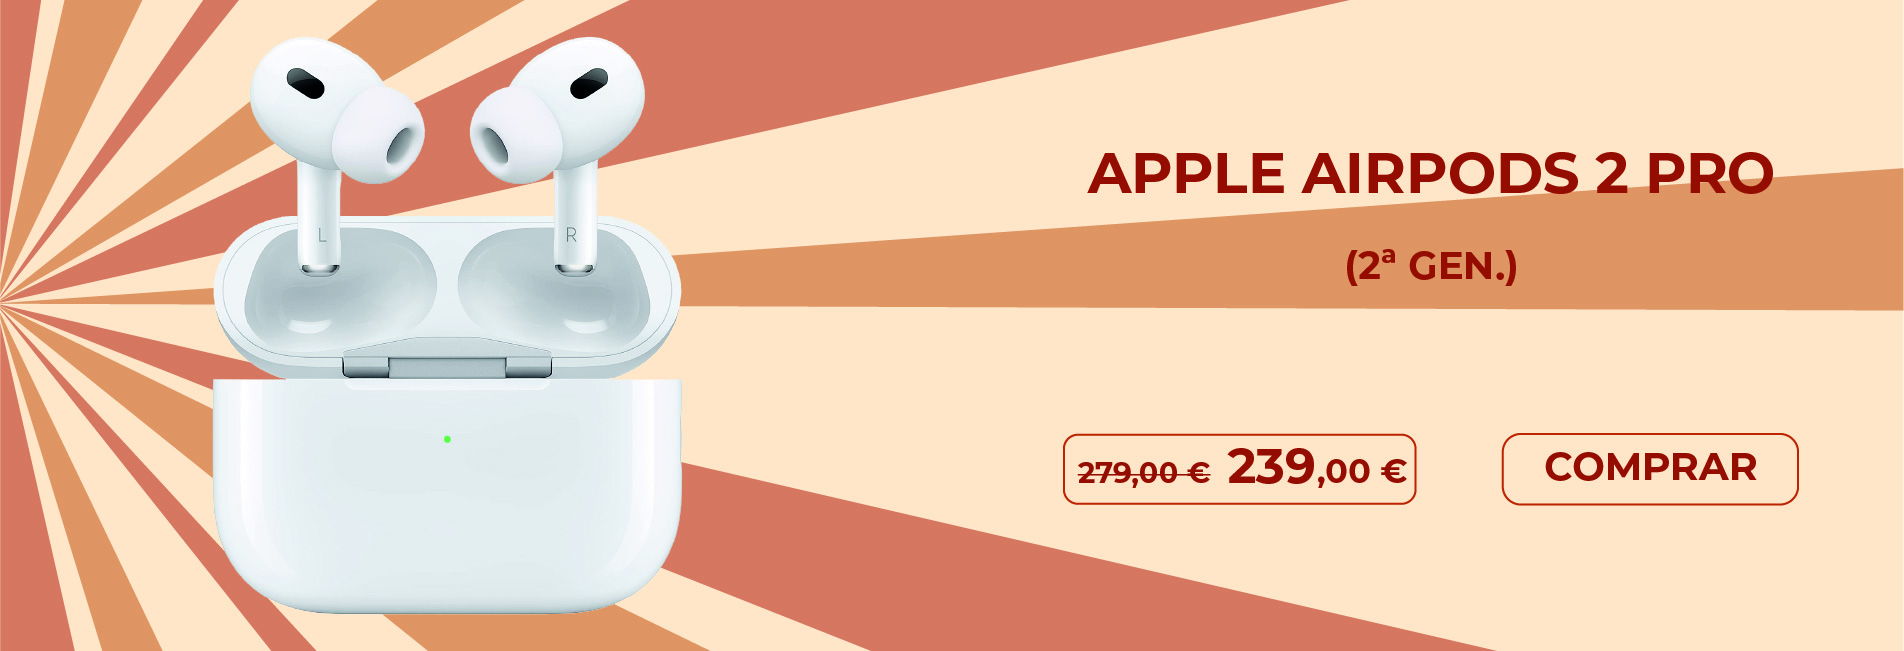 Apple AirPods 2 Pro (2ª gen.)